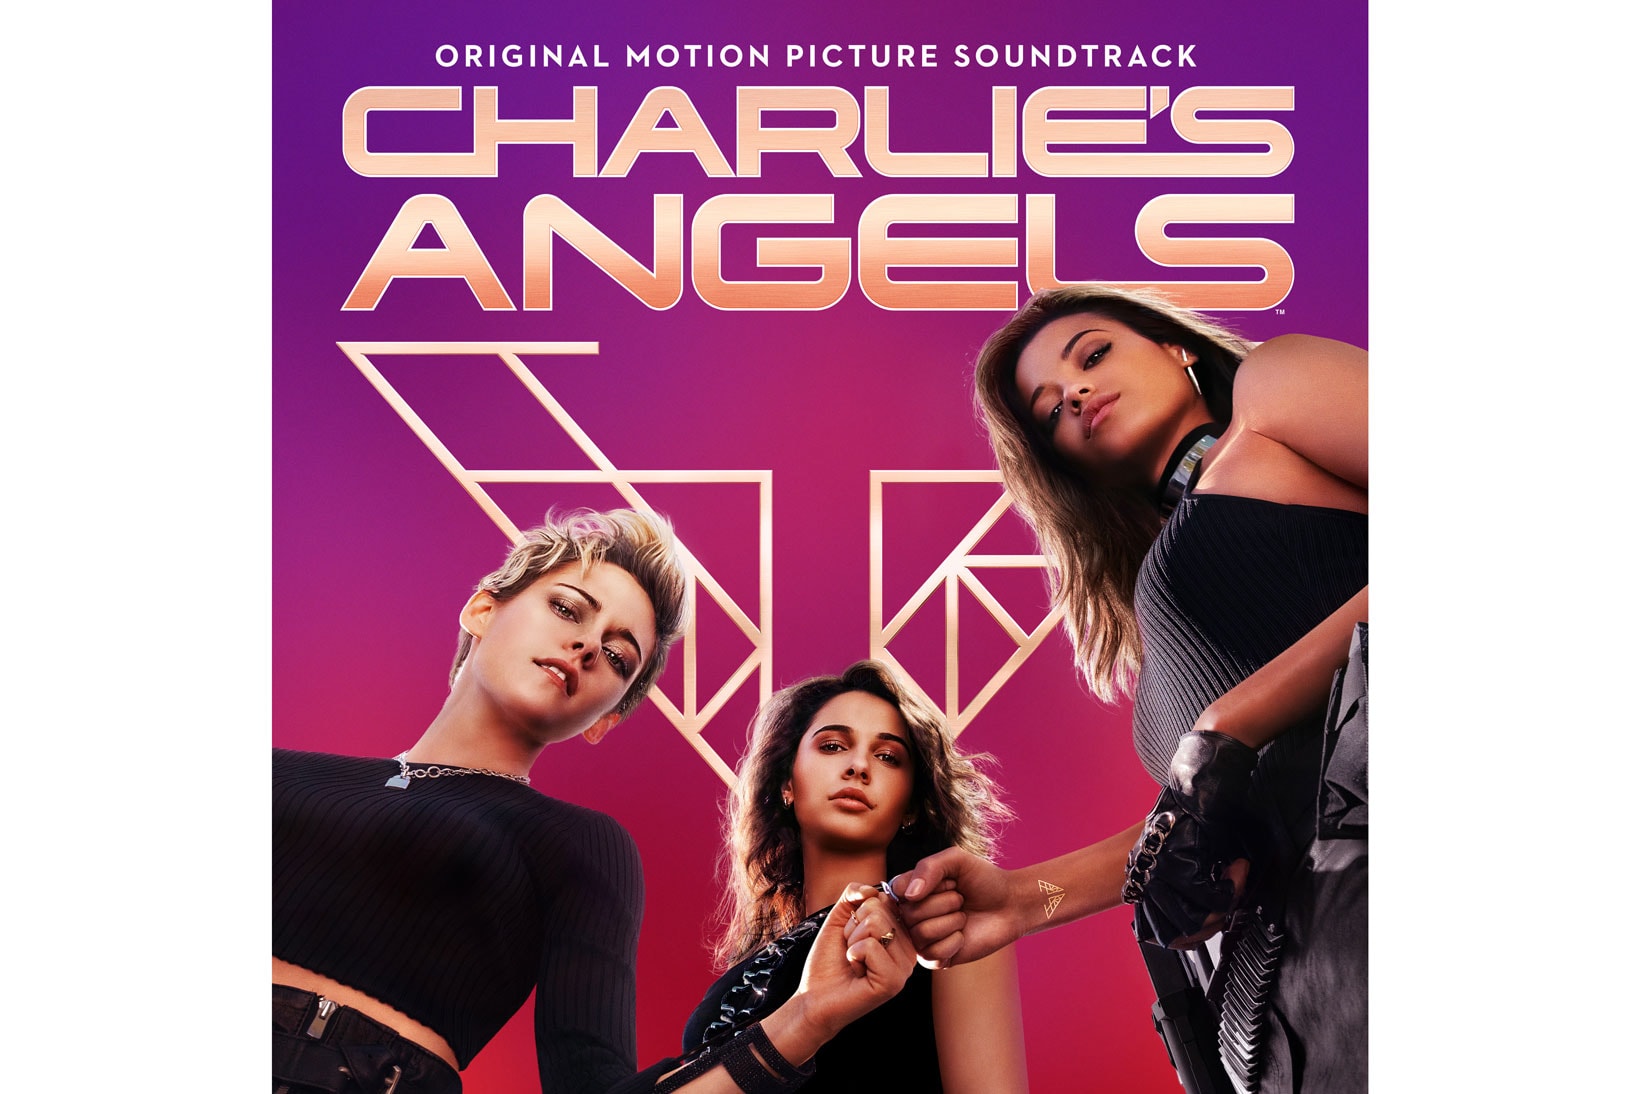 Charlie's Angels Original Motion Picture Soundtrack Album Art Cover